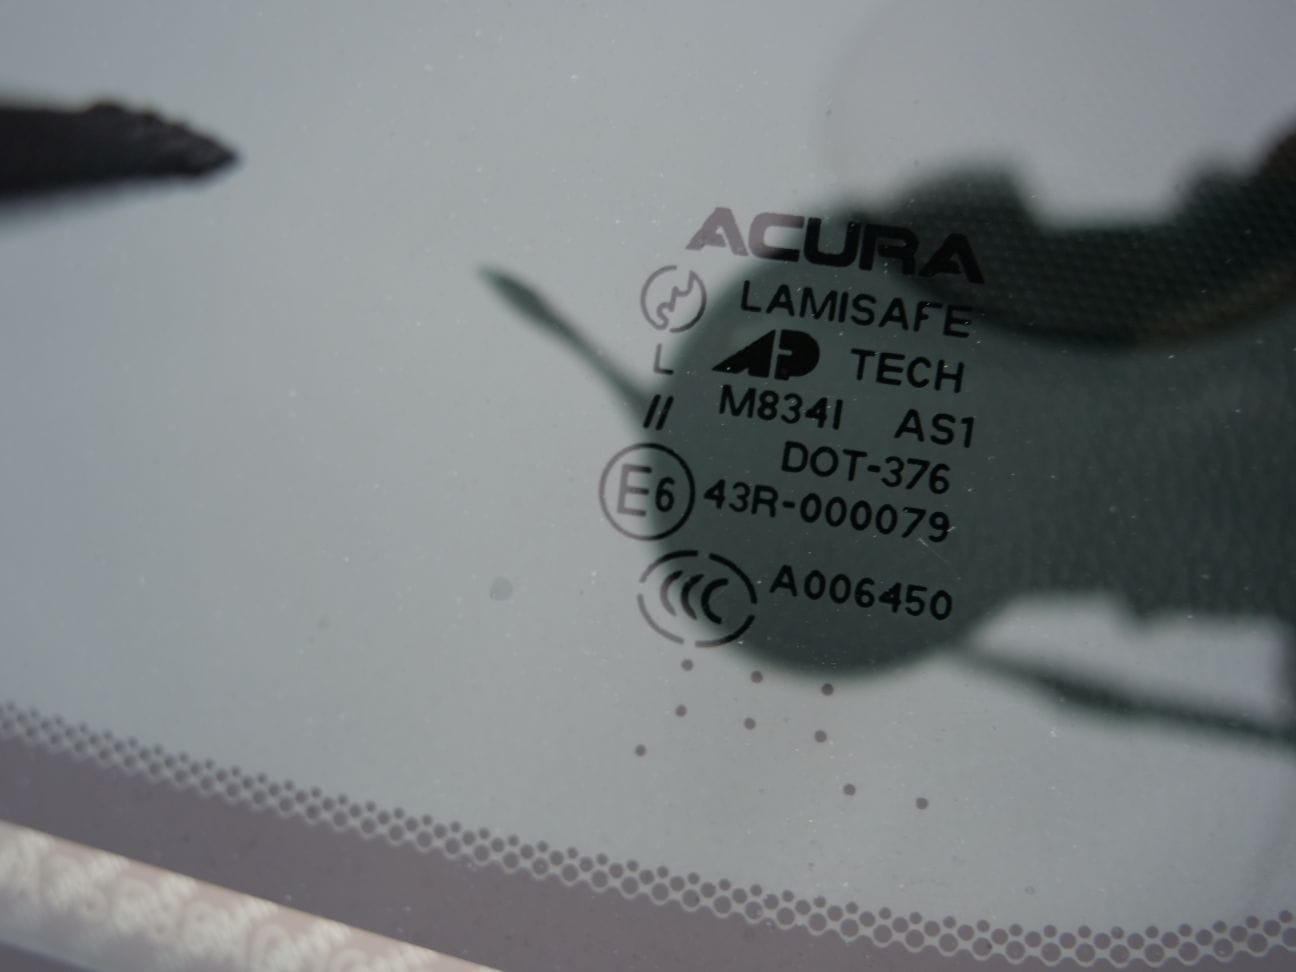 2008 Acura TL - FS: 2008 Acura TL Type S, 6MT, NBP ext, Silver/Ebony int,  85k miles, stock (no mods) - Used - VIN 19UUA75588A009063 - 85,500 Miles - 6 cyl - 2WD - Manual - Sedan - Black - Torrance, CA 90503, United States